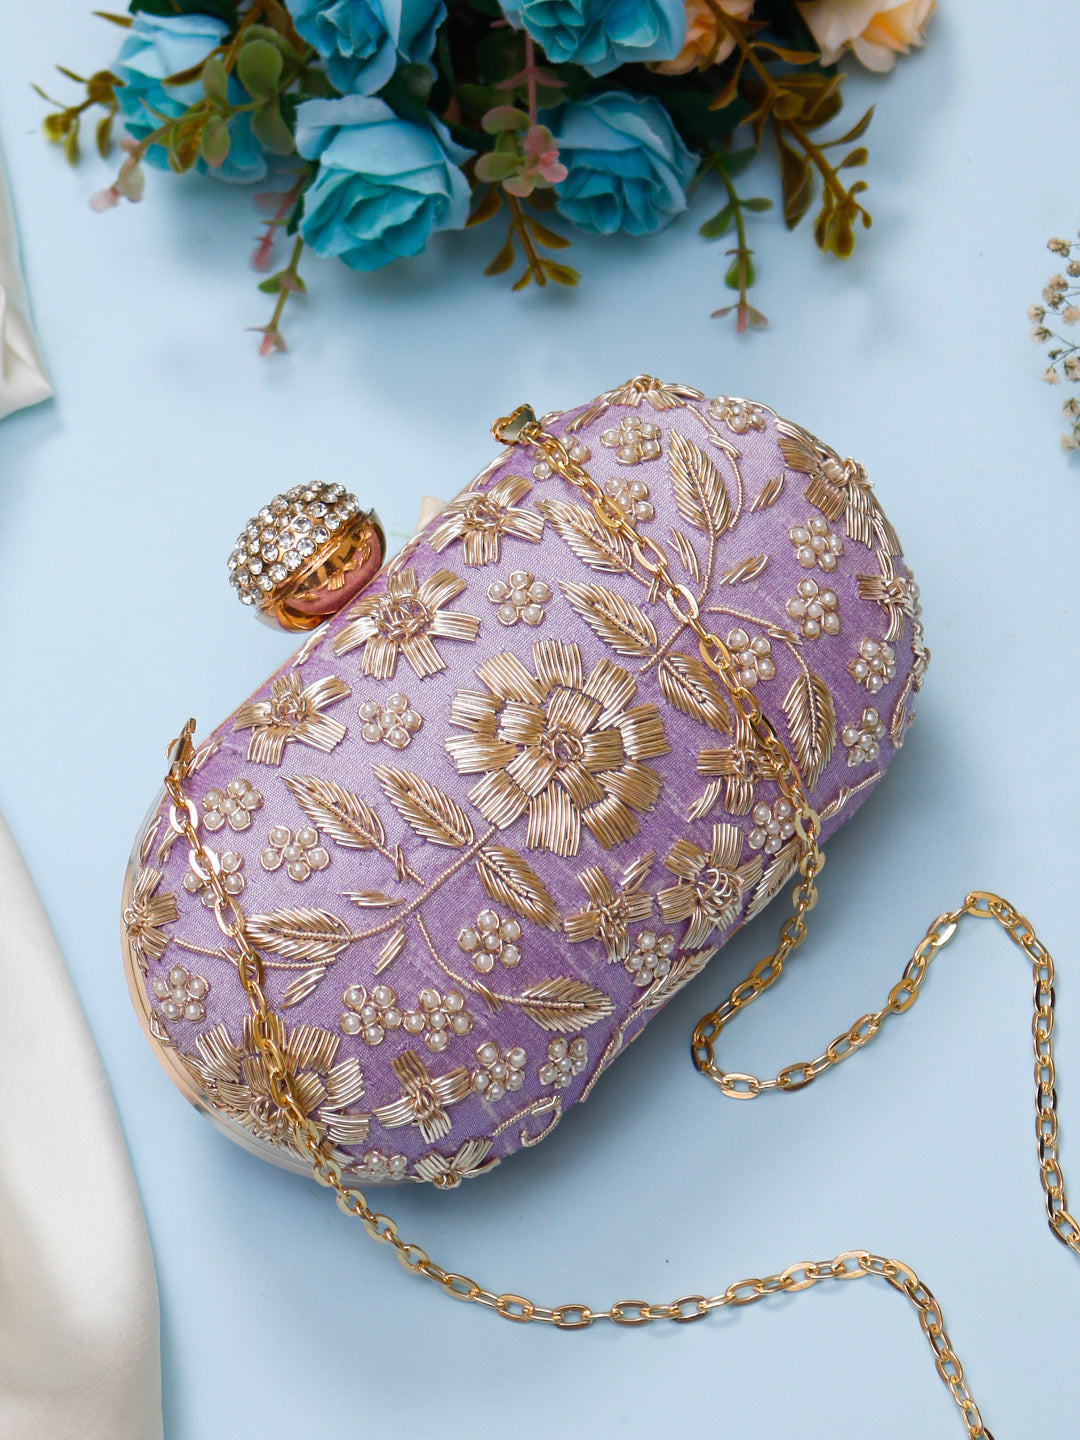 Swisni handmade embroidery lilac oval clutch